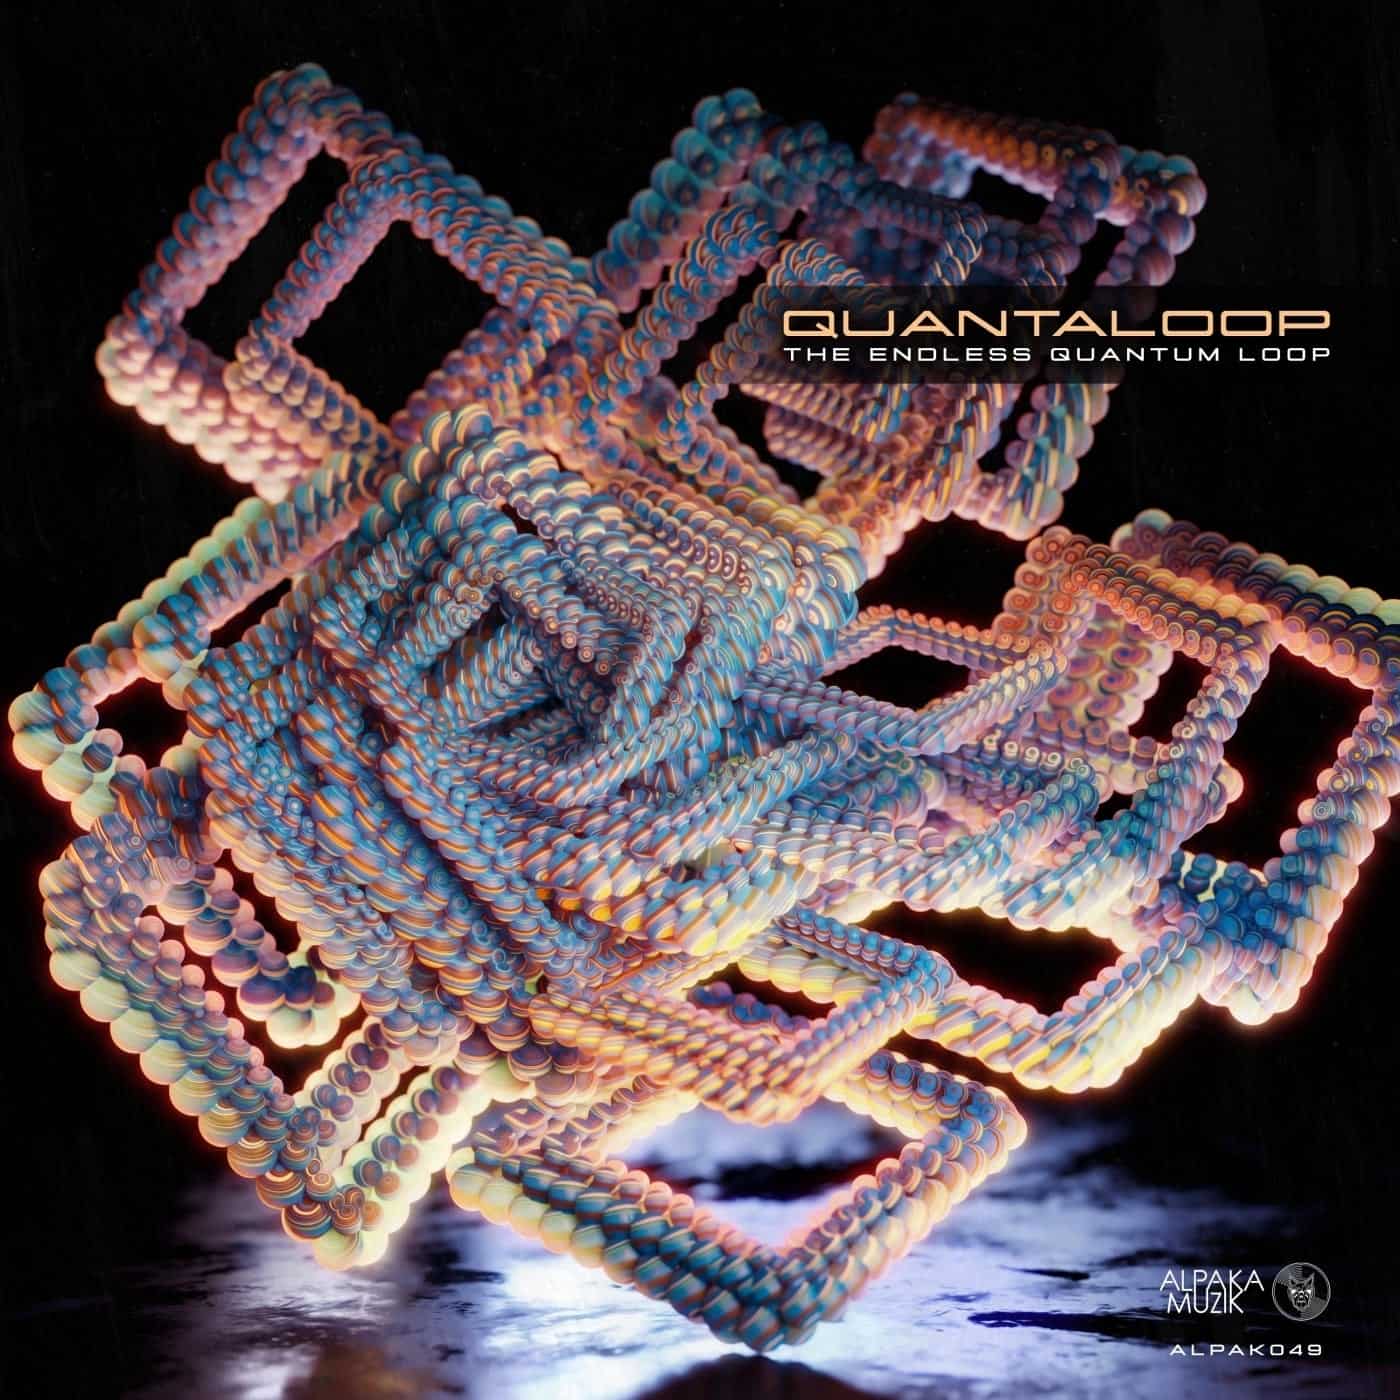 image cover: Quantaloop - The Endless Quantum Loop / ALPAK049